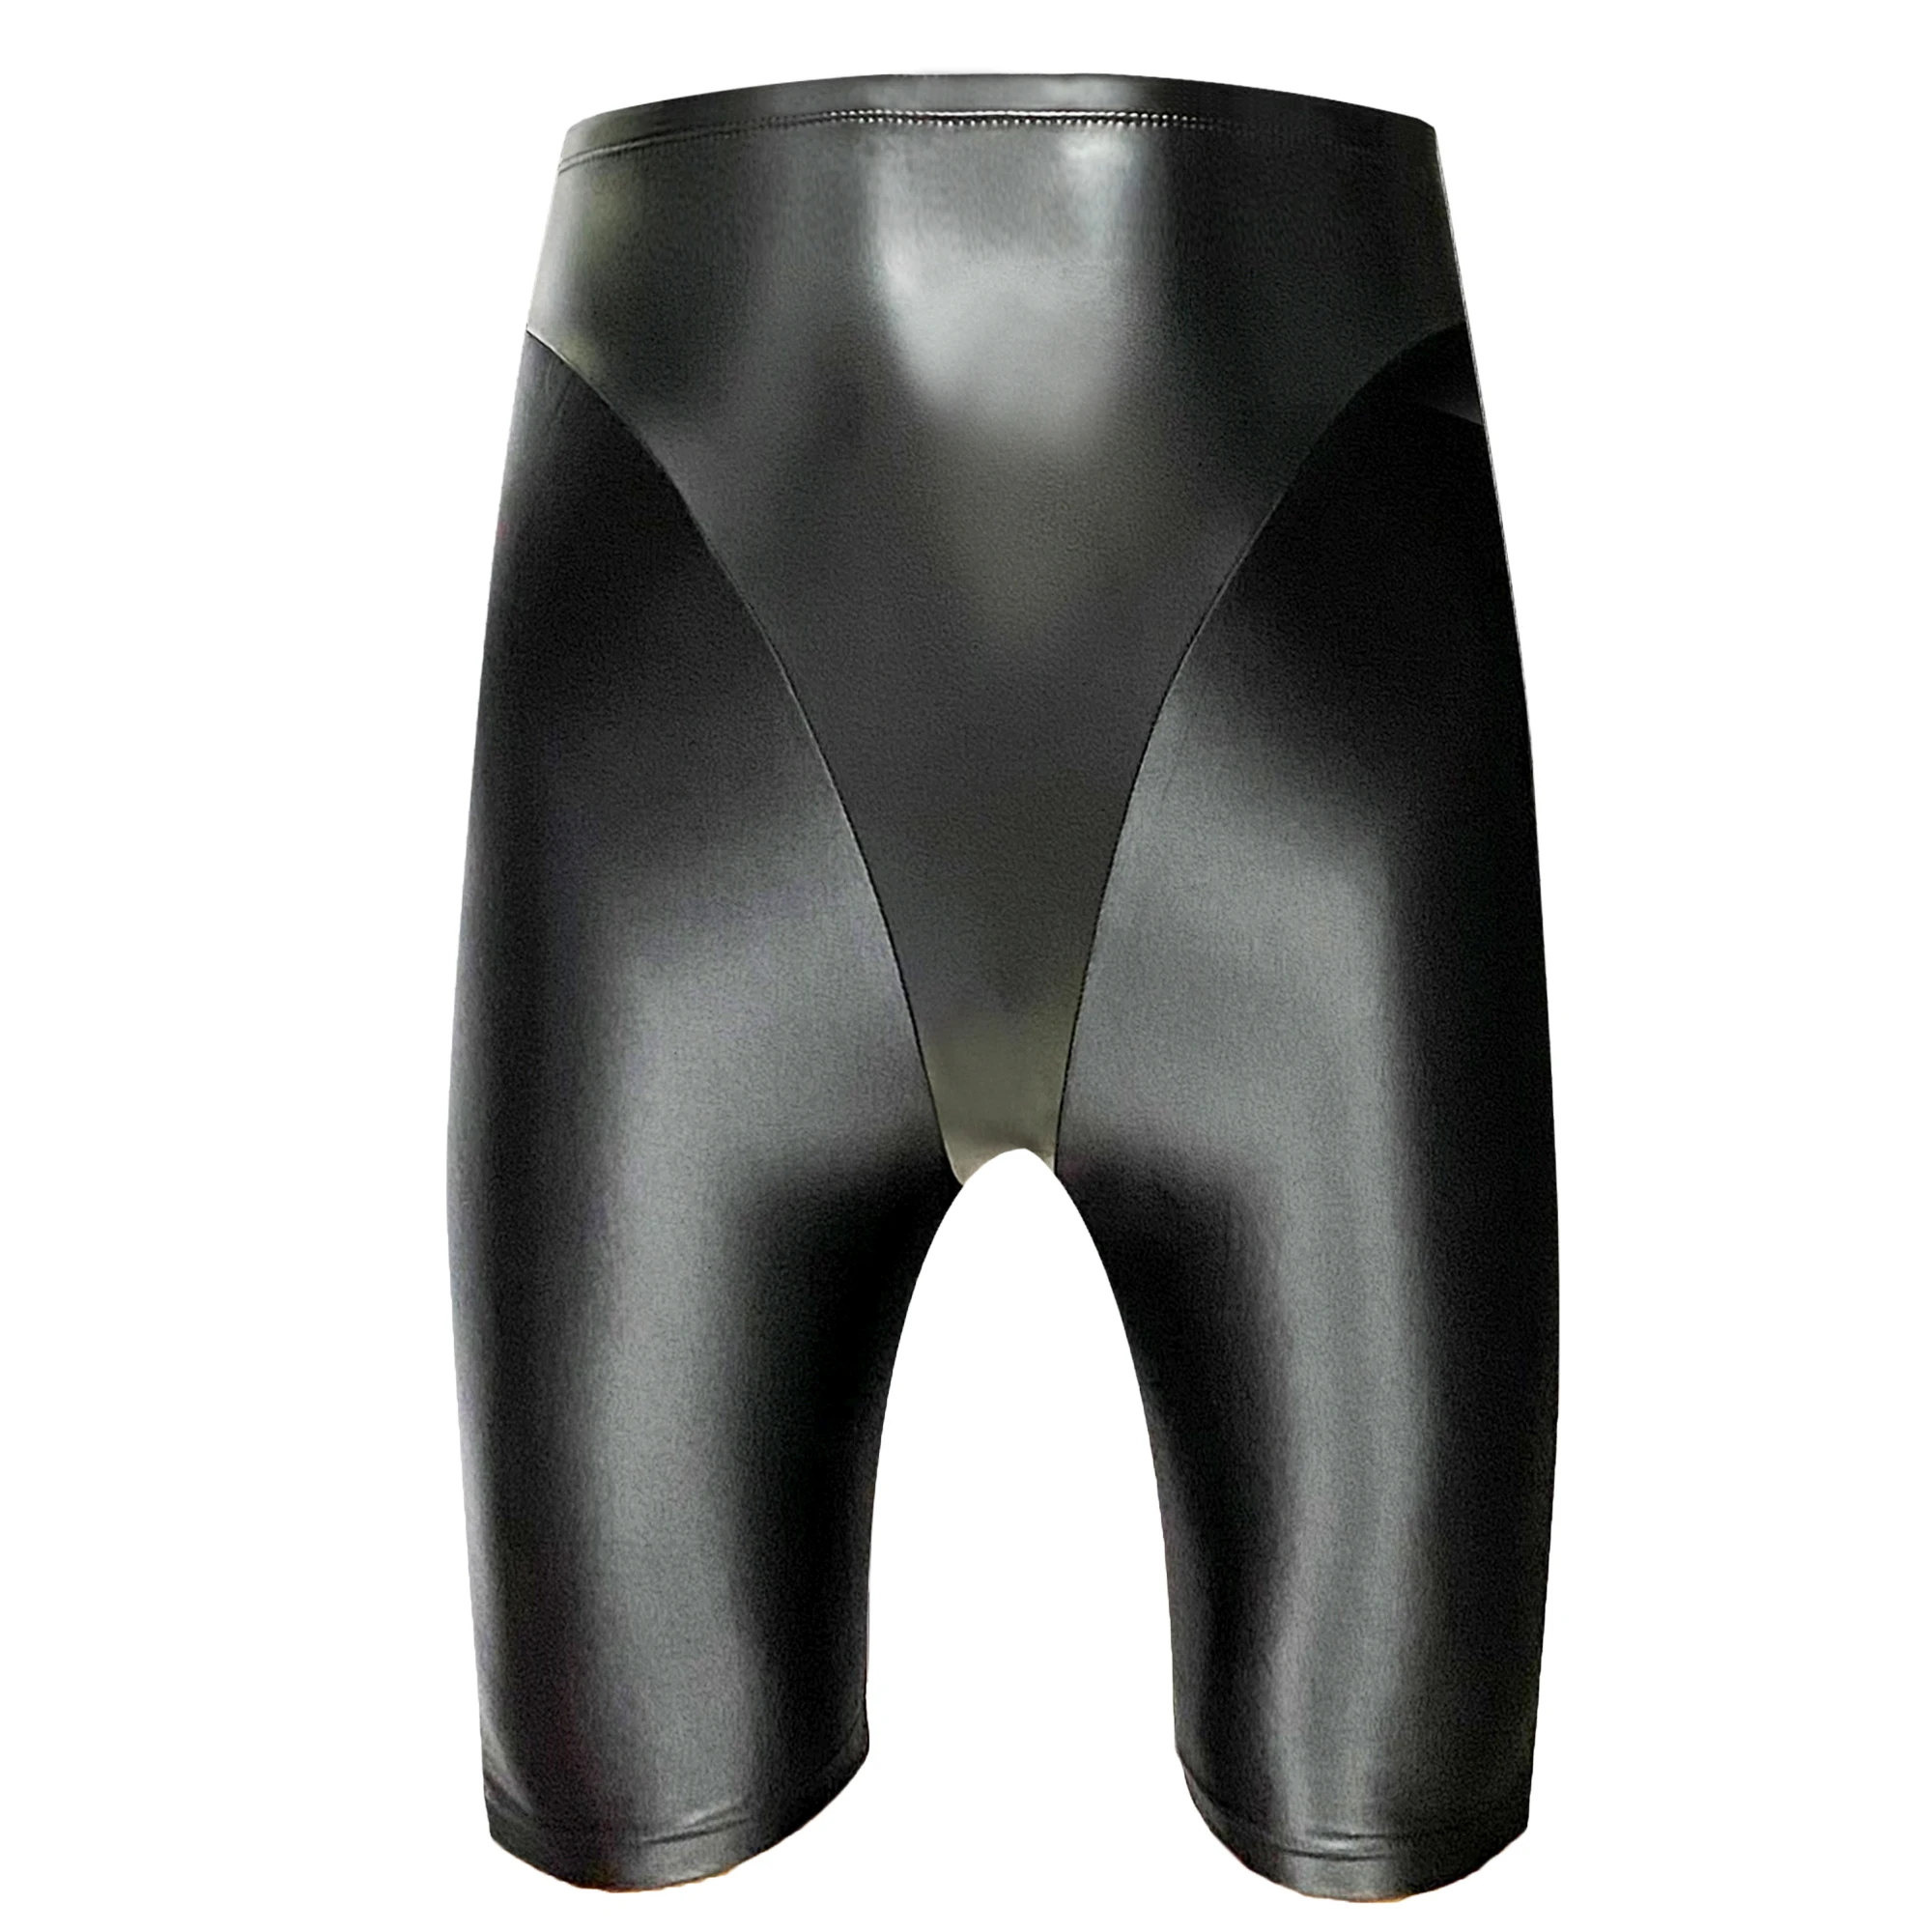 

XCKNY Pu glossy materia stitching 3XL satin smooth opaque pantyhose bright tights sexy silk slim high waisted Sports swim pants